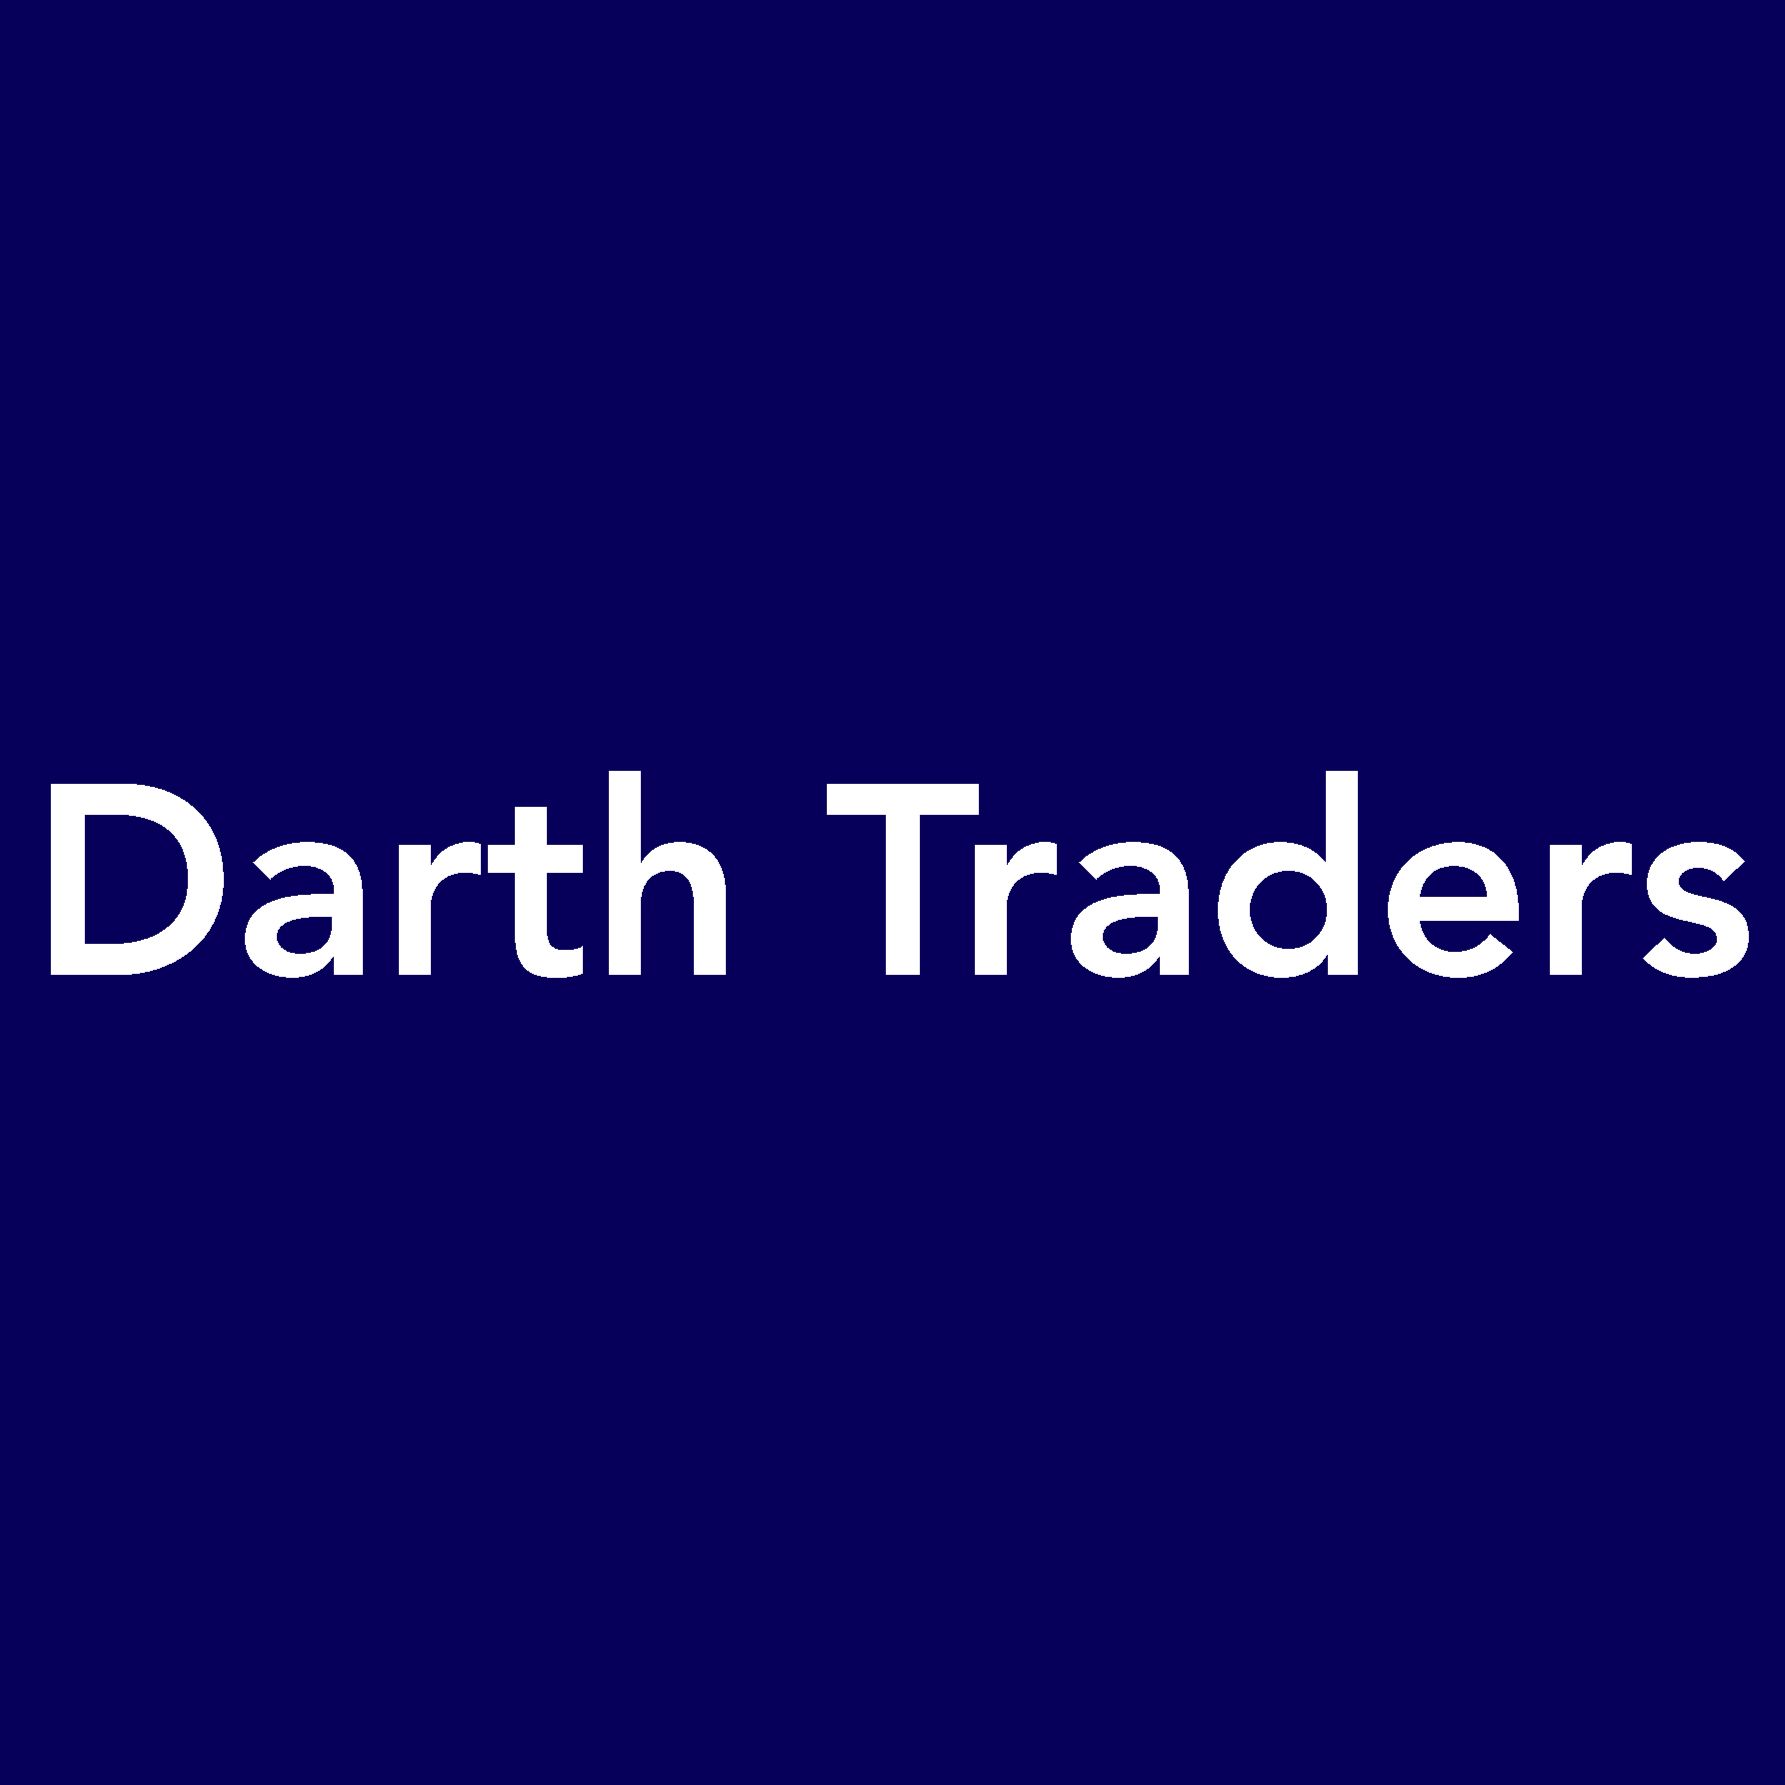 Darth Traders